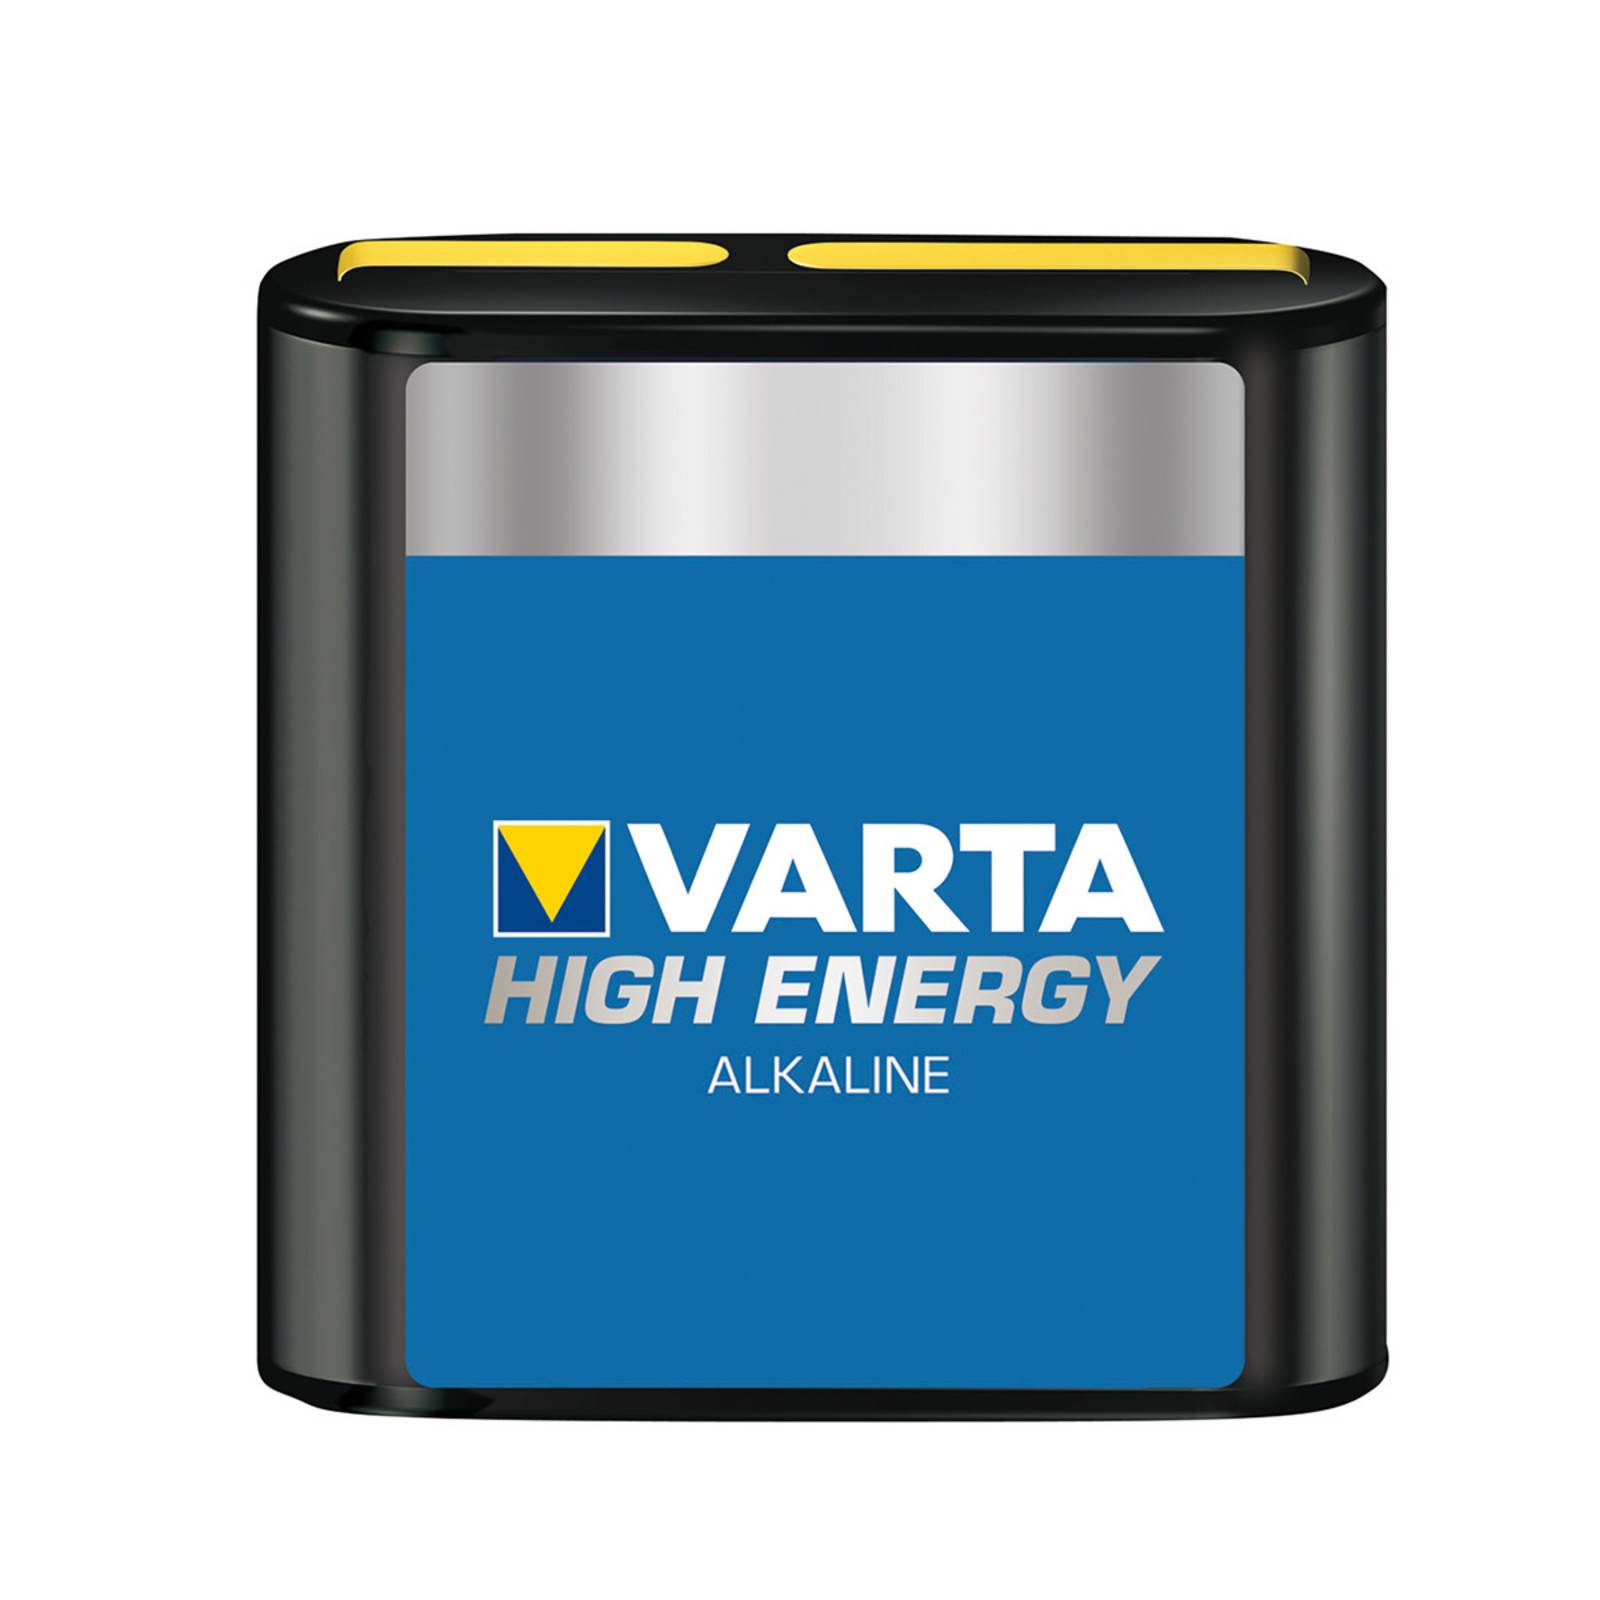 Varta High Energy 4,5 V batterie pour lampes plates